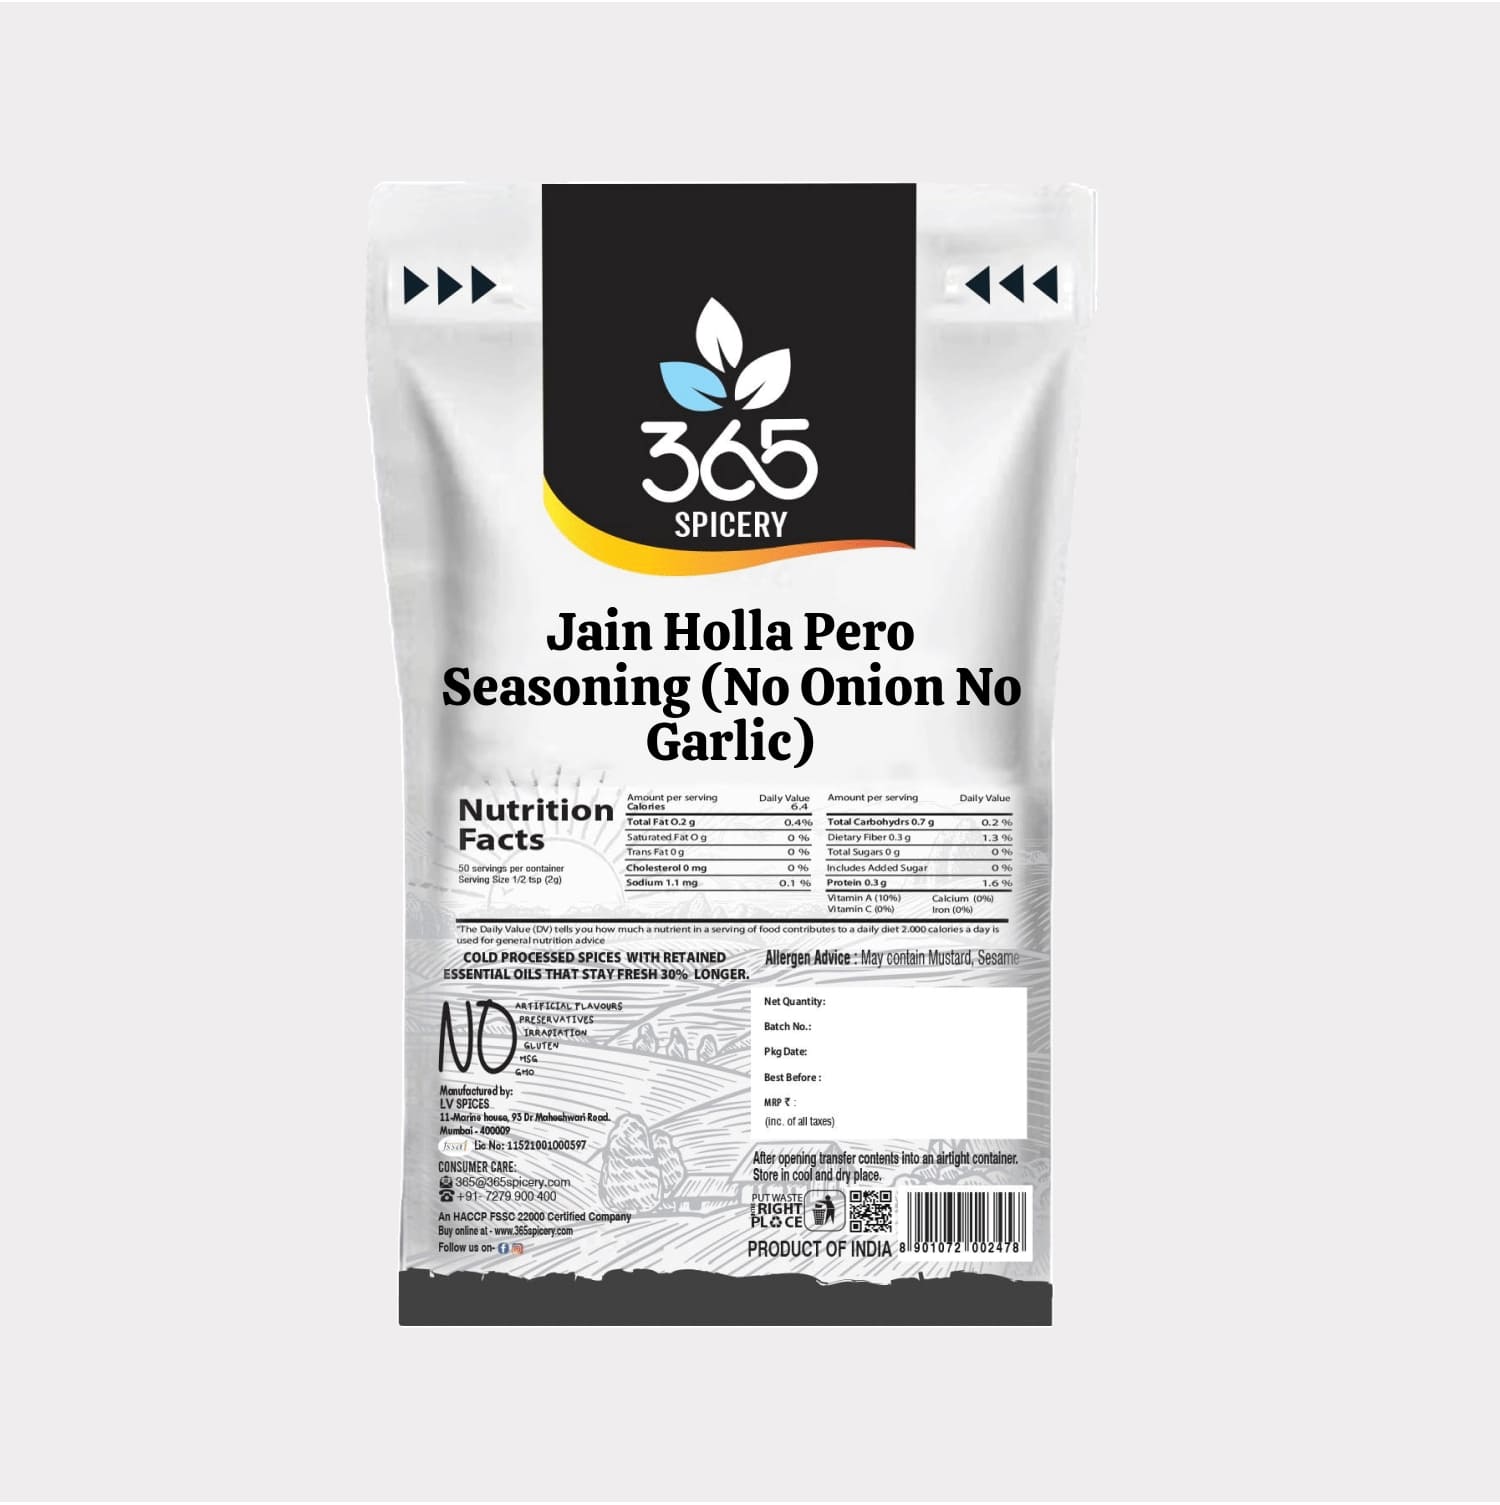 Jain Holla Pero Seasoning (No Onion No Garlic)